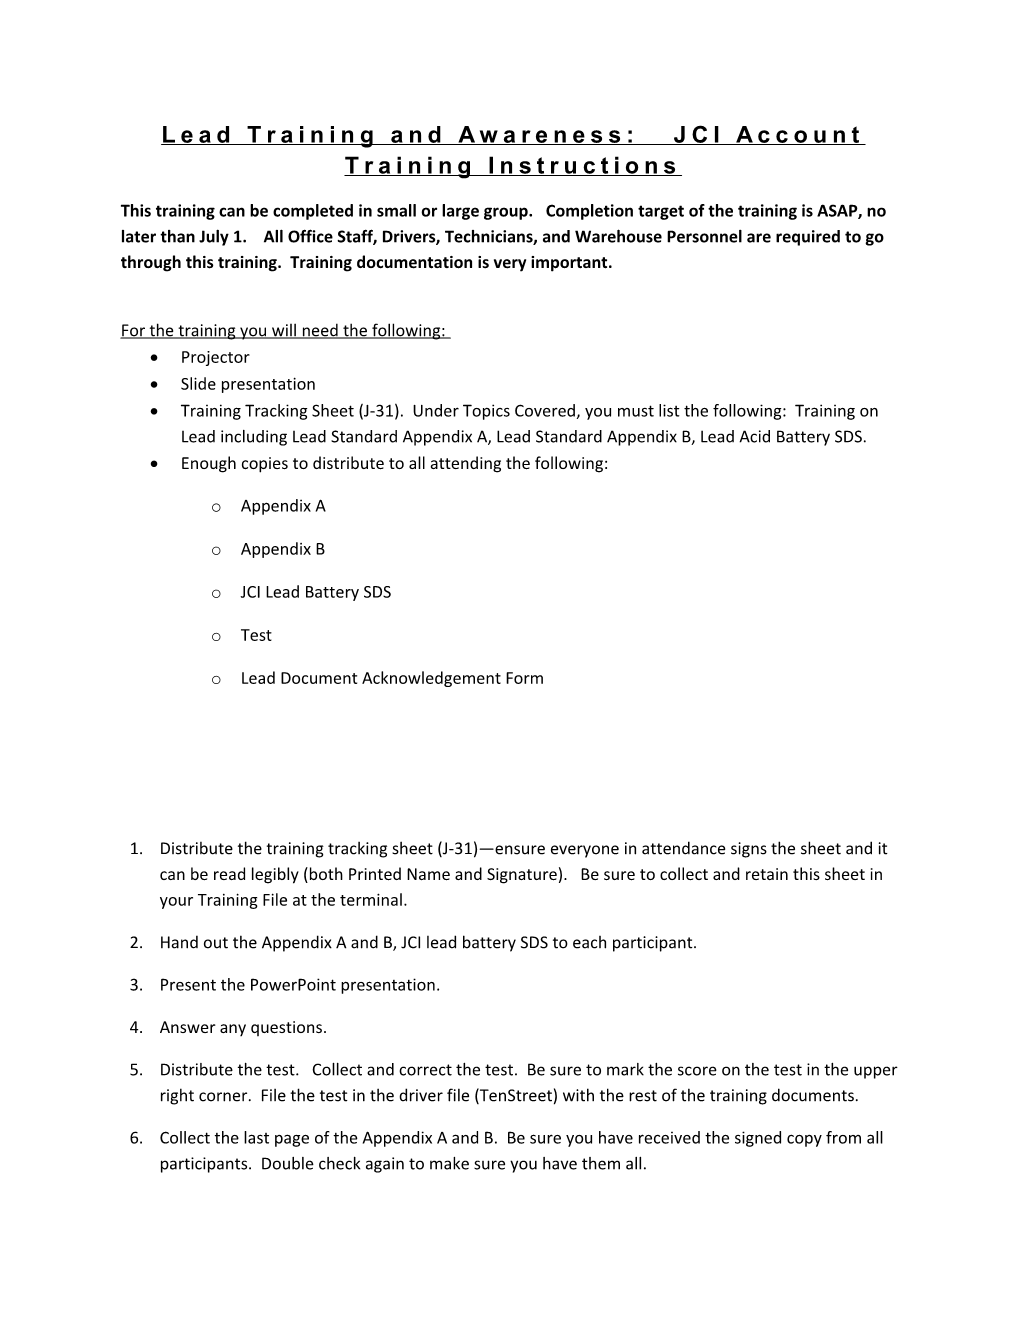 Lead Training and Awareness: JCI Account Training Instructions